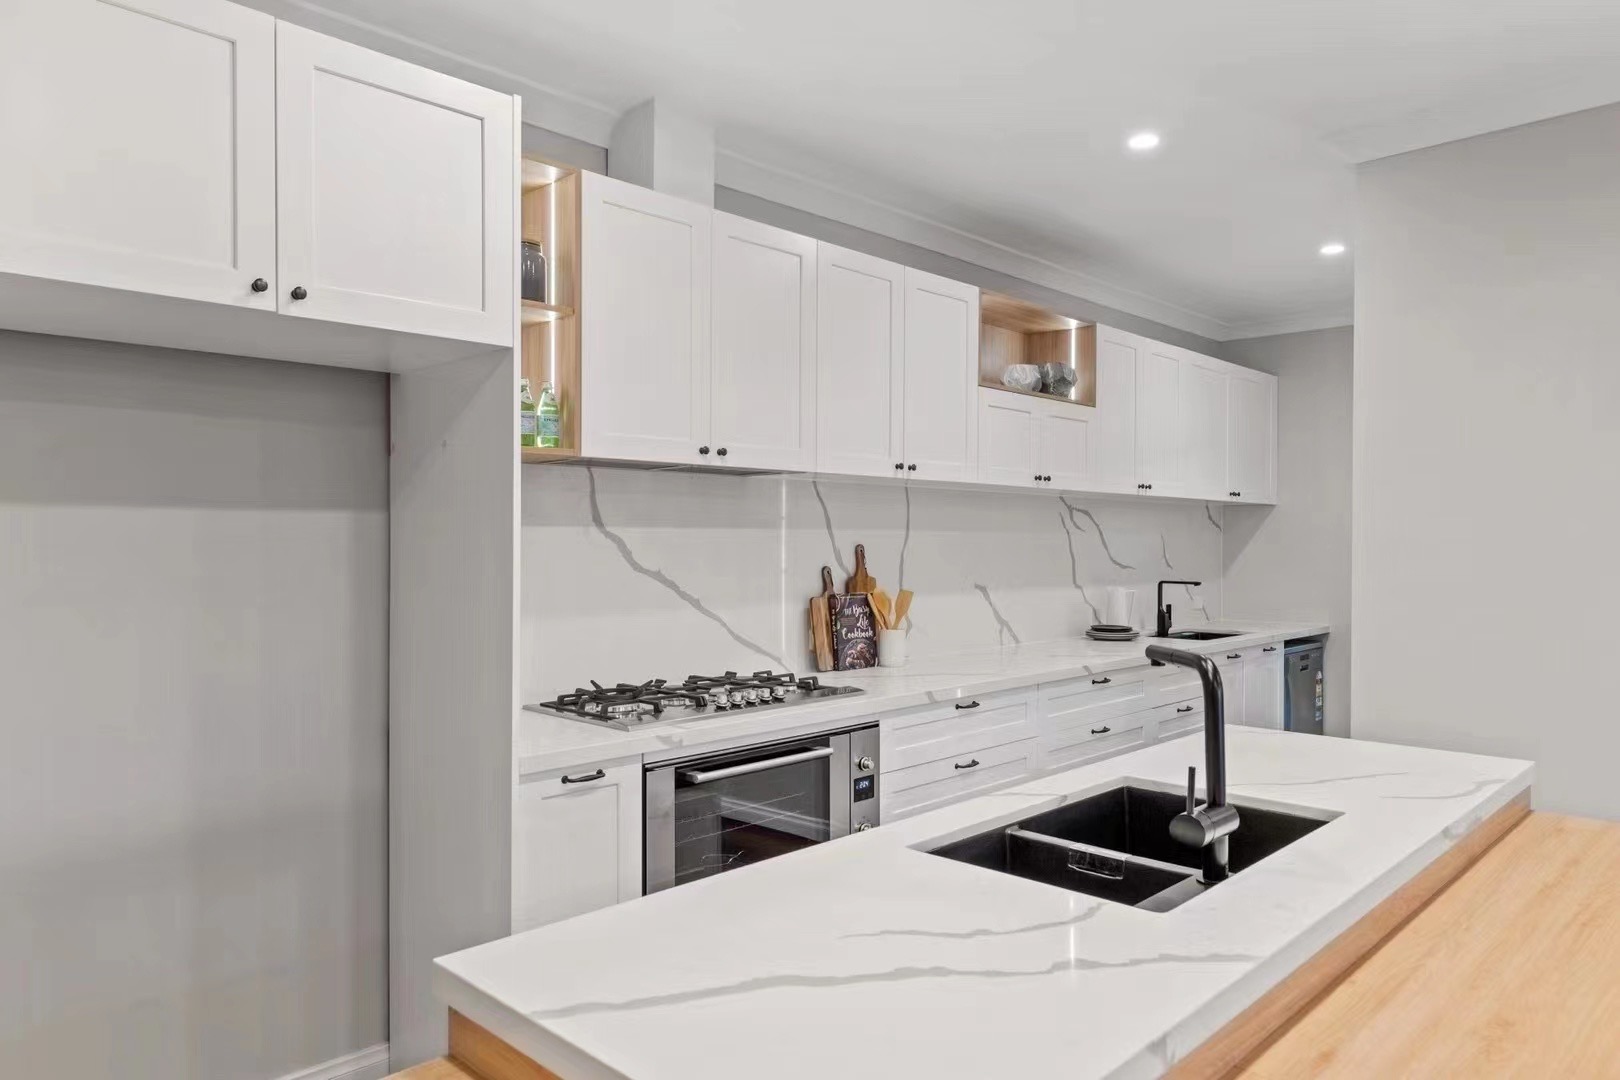 Finished kitchen cabinet ,wardrobe,bathroom vanity project case in Perth Australia 